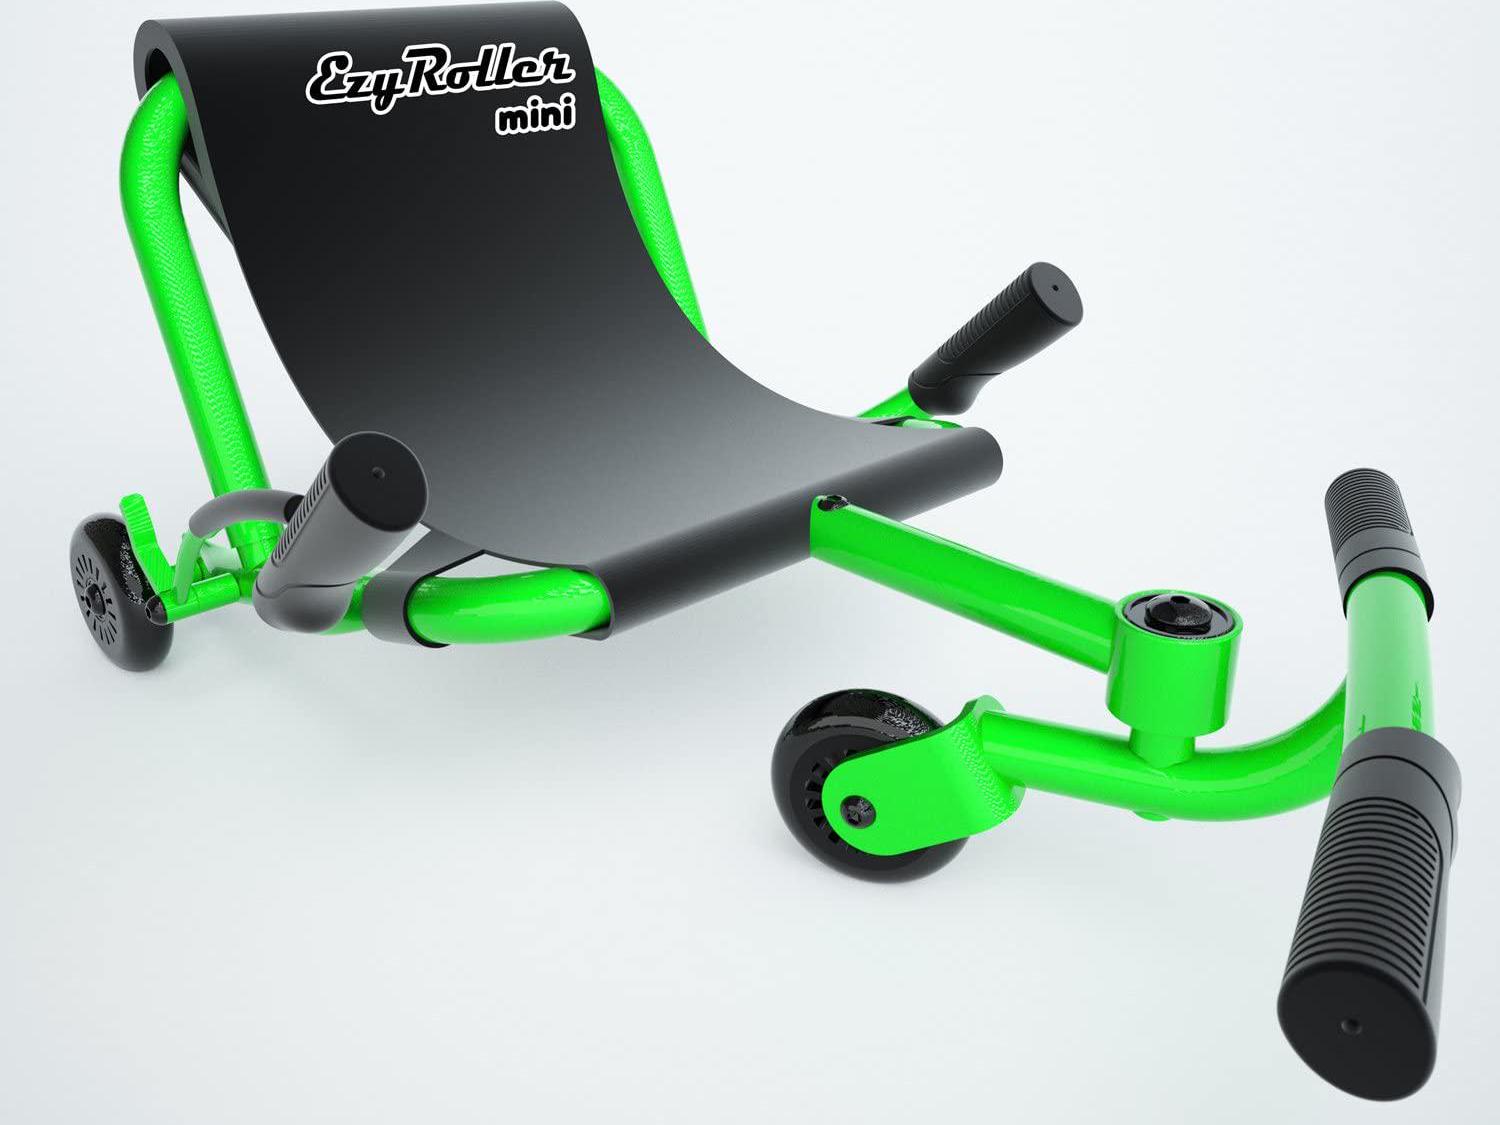 EzyRoller, EzyRoller Mini Ride On for Ages 2-4 - Green